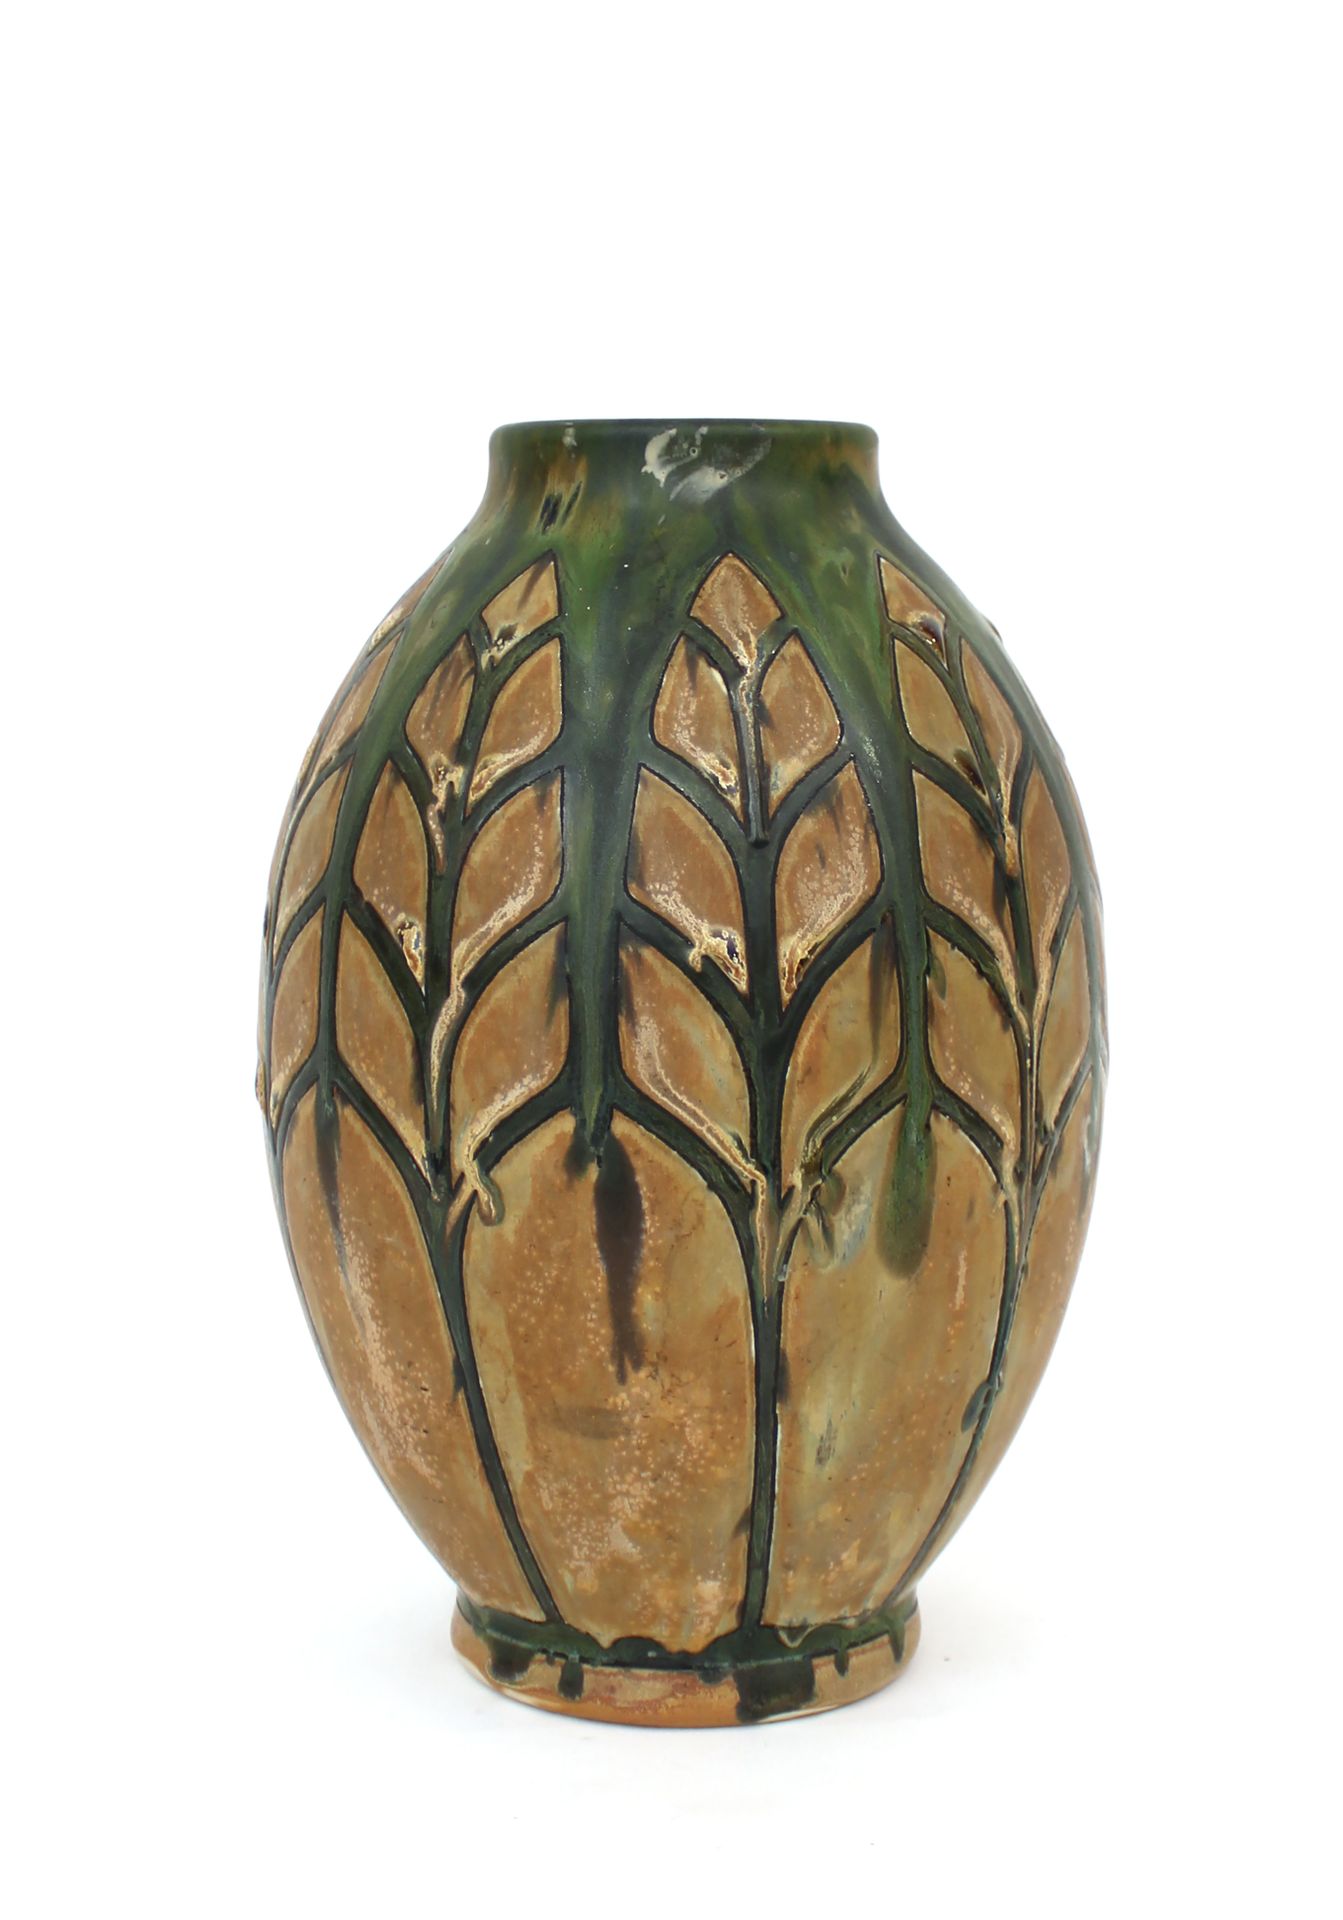 Null 查尔斯-卡特（1880-1966 年）为波赫兄弟设计
搪瓷花瓶，饰以风格化的叶子，底座下有标记
H.24.5 厘米